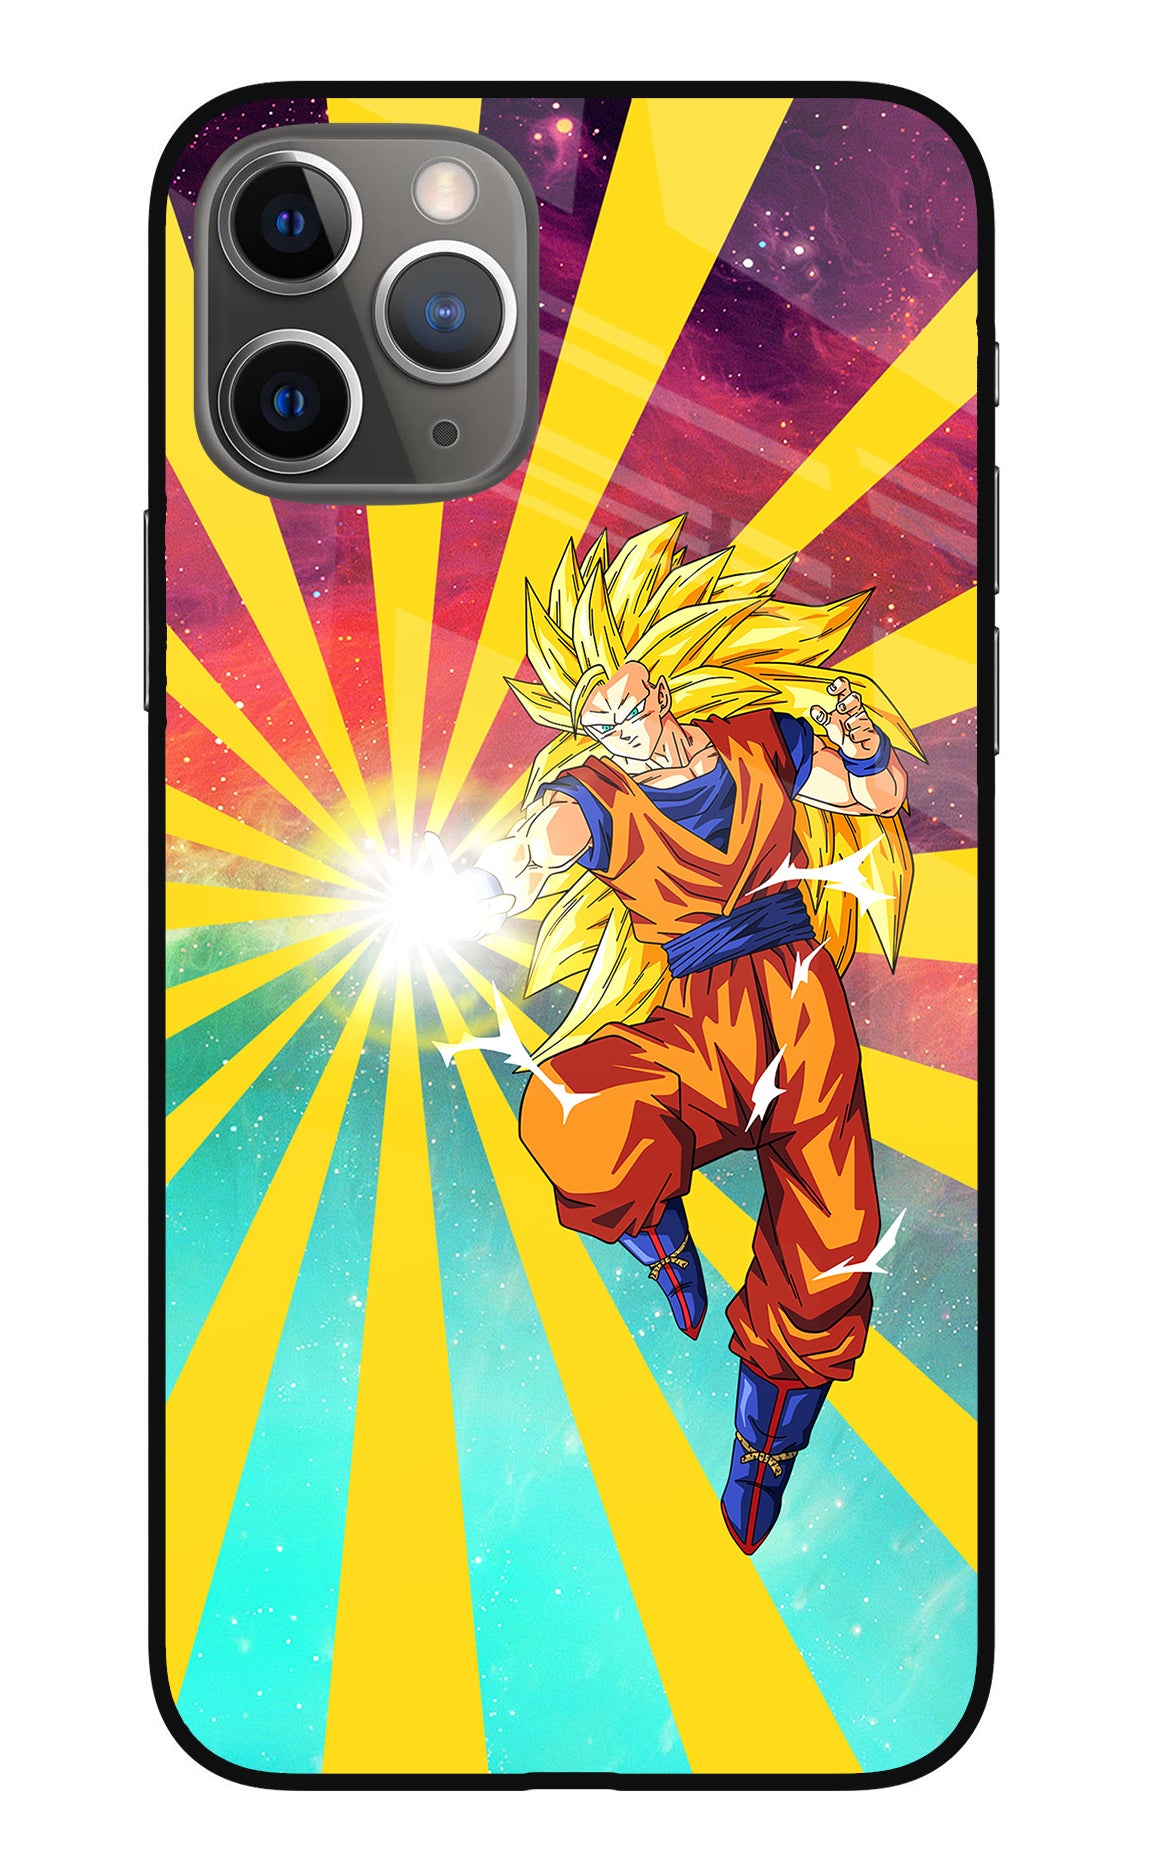 Goku Super Saiyan iPhone 11 Pro Max Back Cover